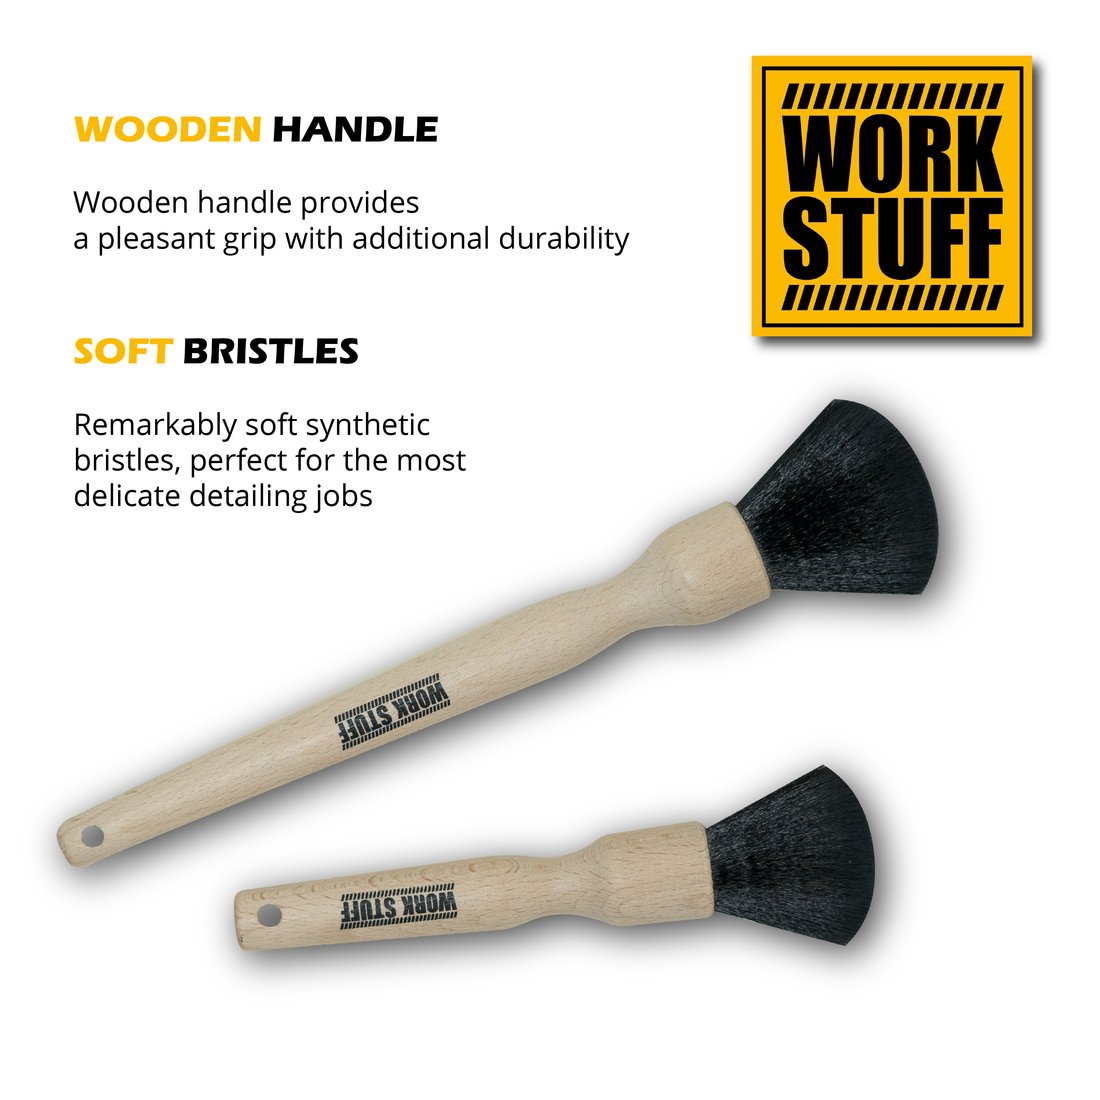 Work Stuff Ulta Soft Brush with wooden handle . Perfect interior brush. Work Stuff Cork Ireland